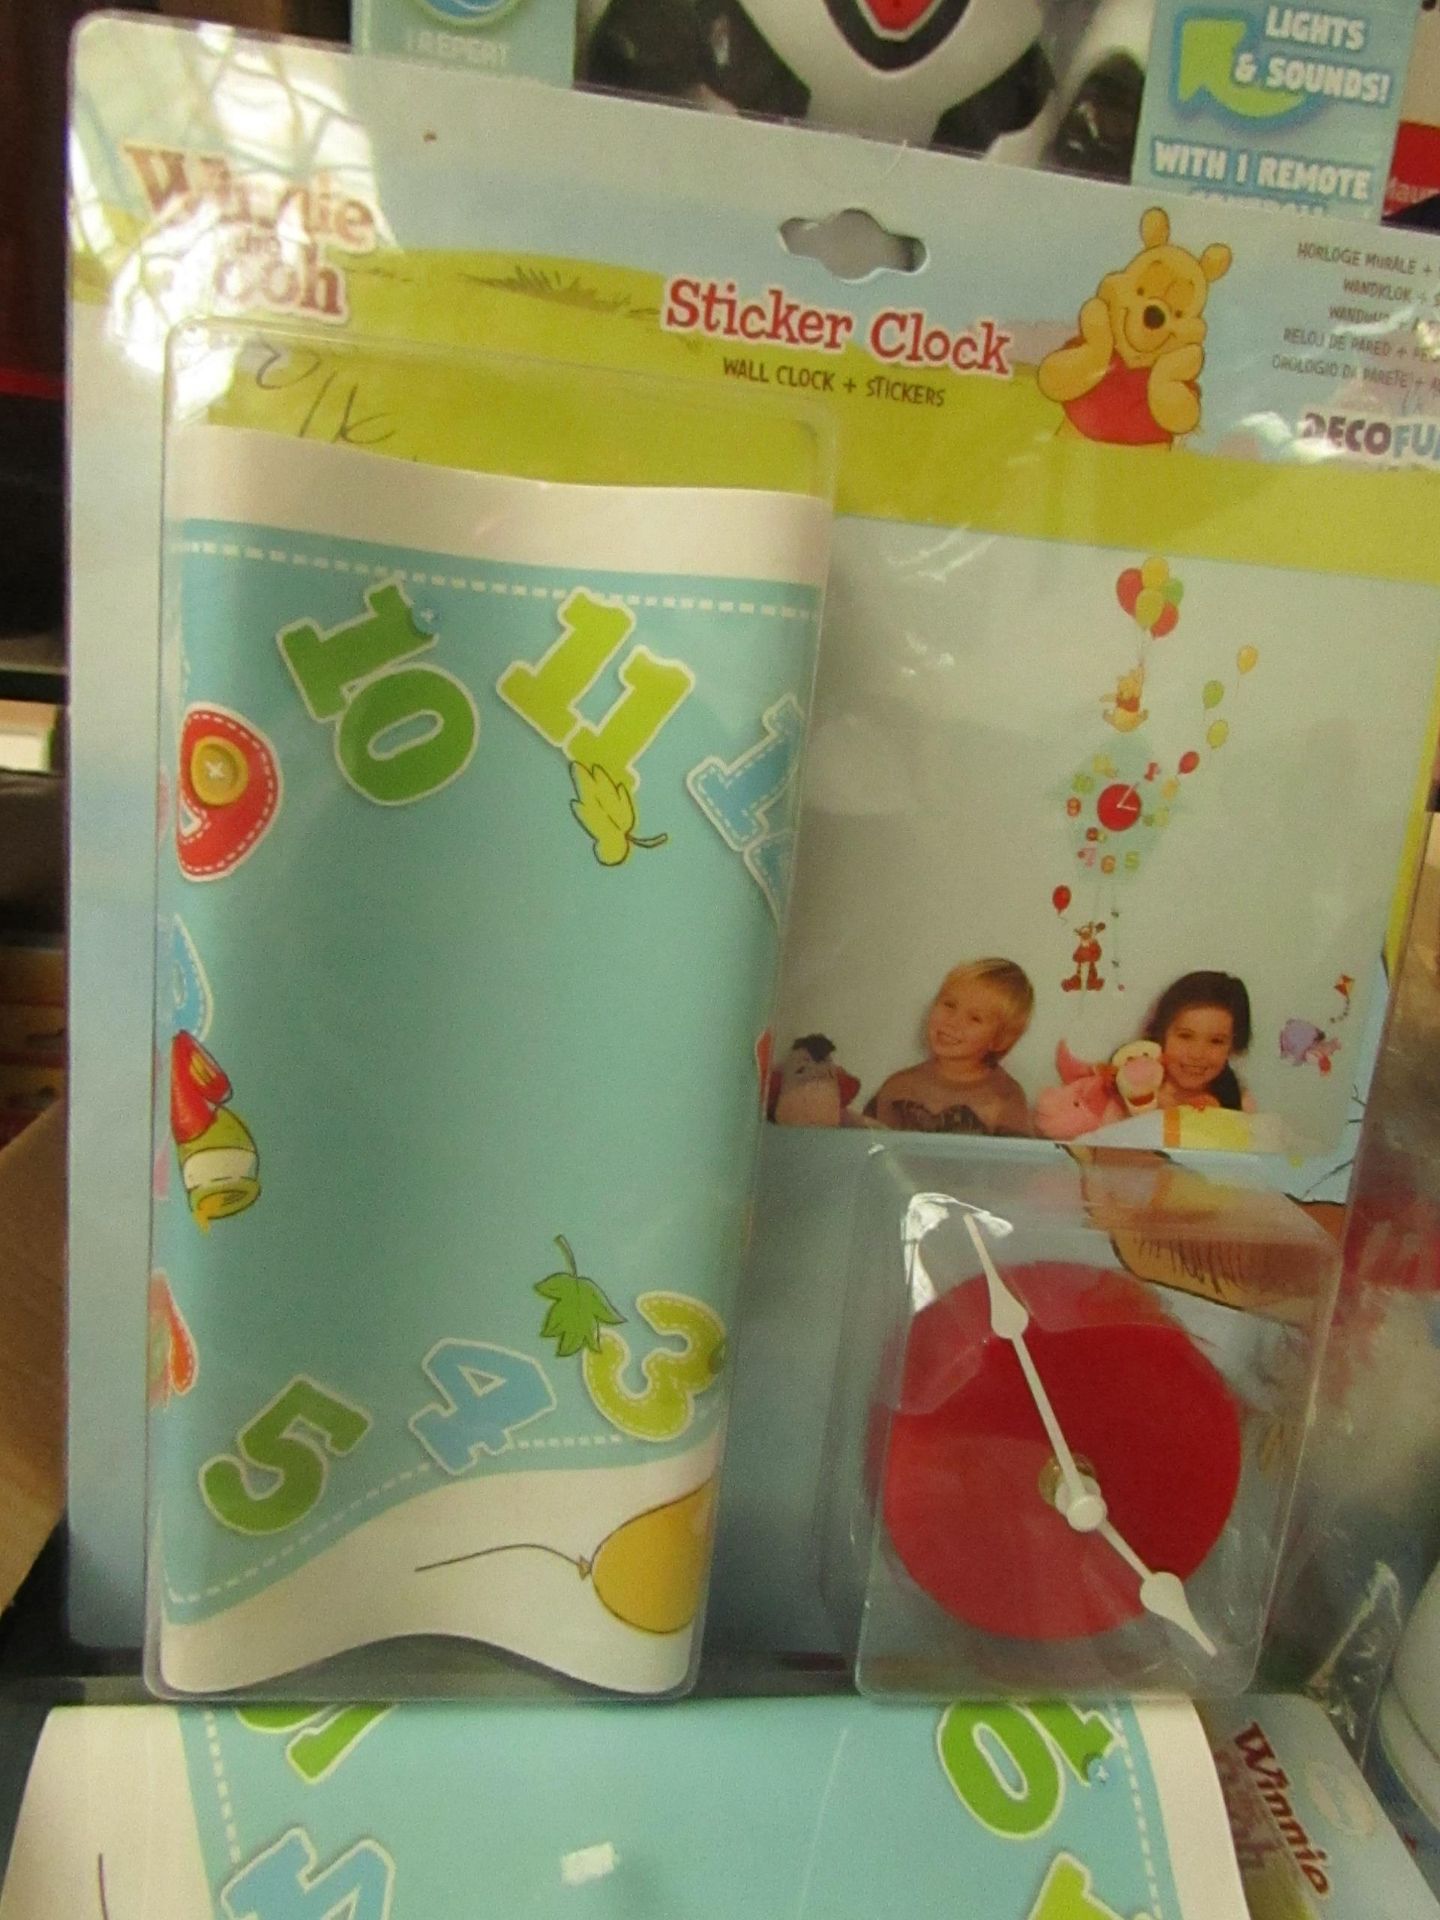 2x Disney Winnie the pooh sticker clock + Stickers, New & Boxed